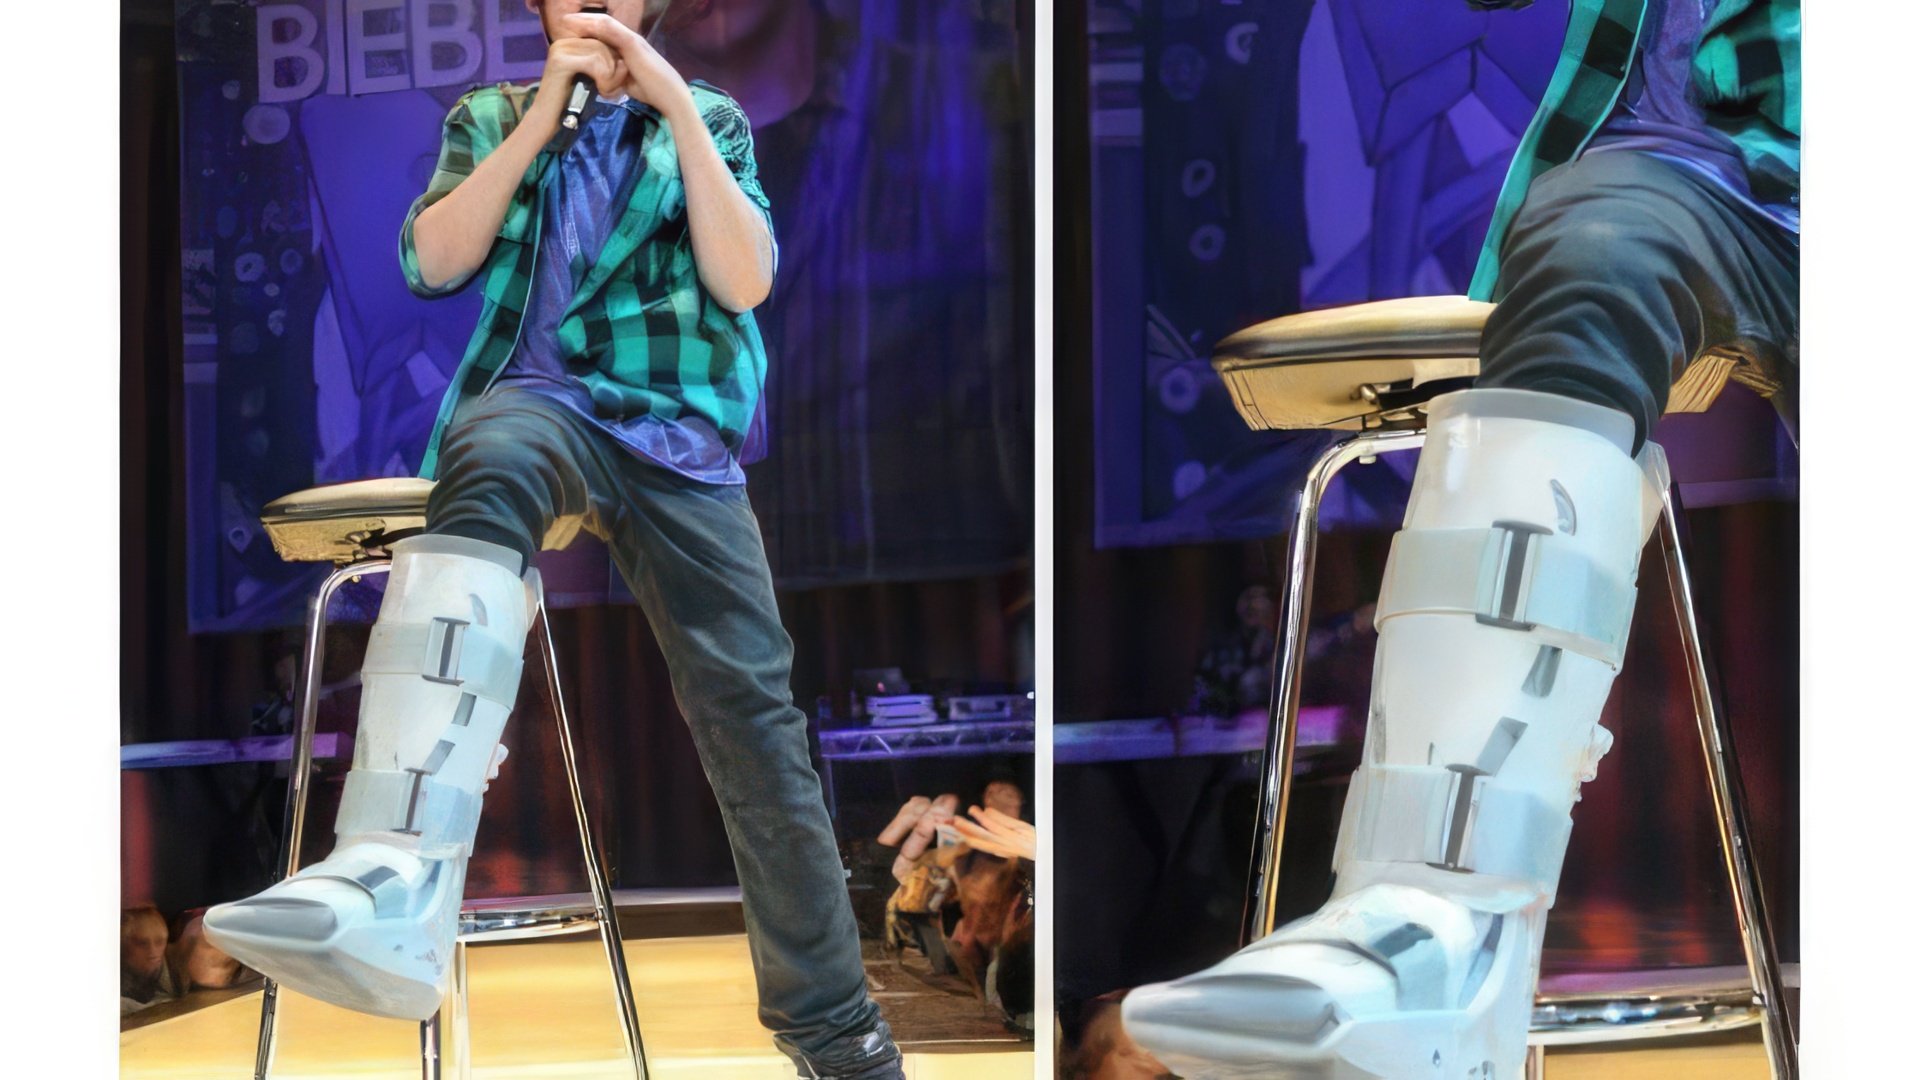 In 2009, Justin Bieber broke his leg during a concert